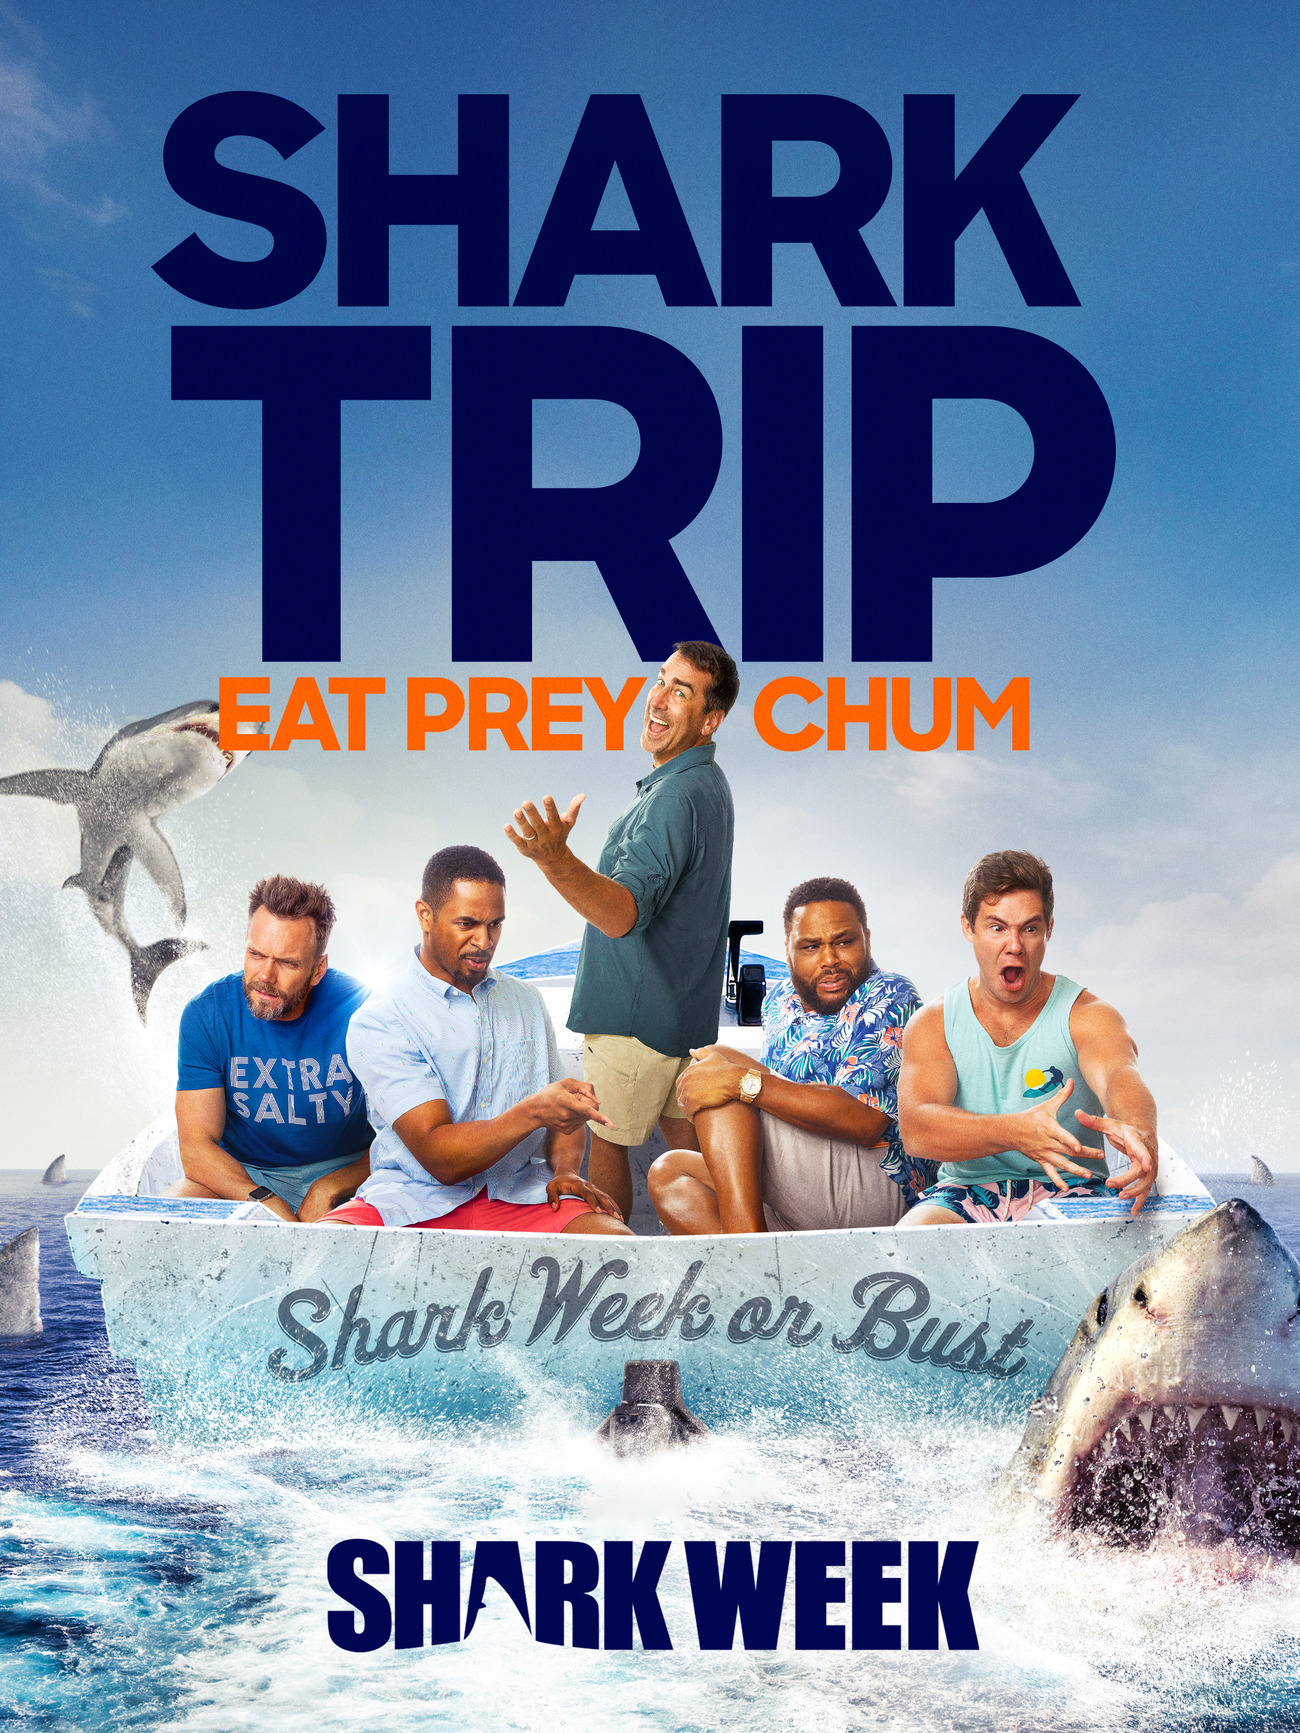 Shark Trip. Eat, Prey, Chum